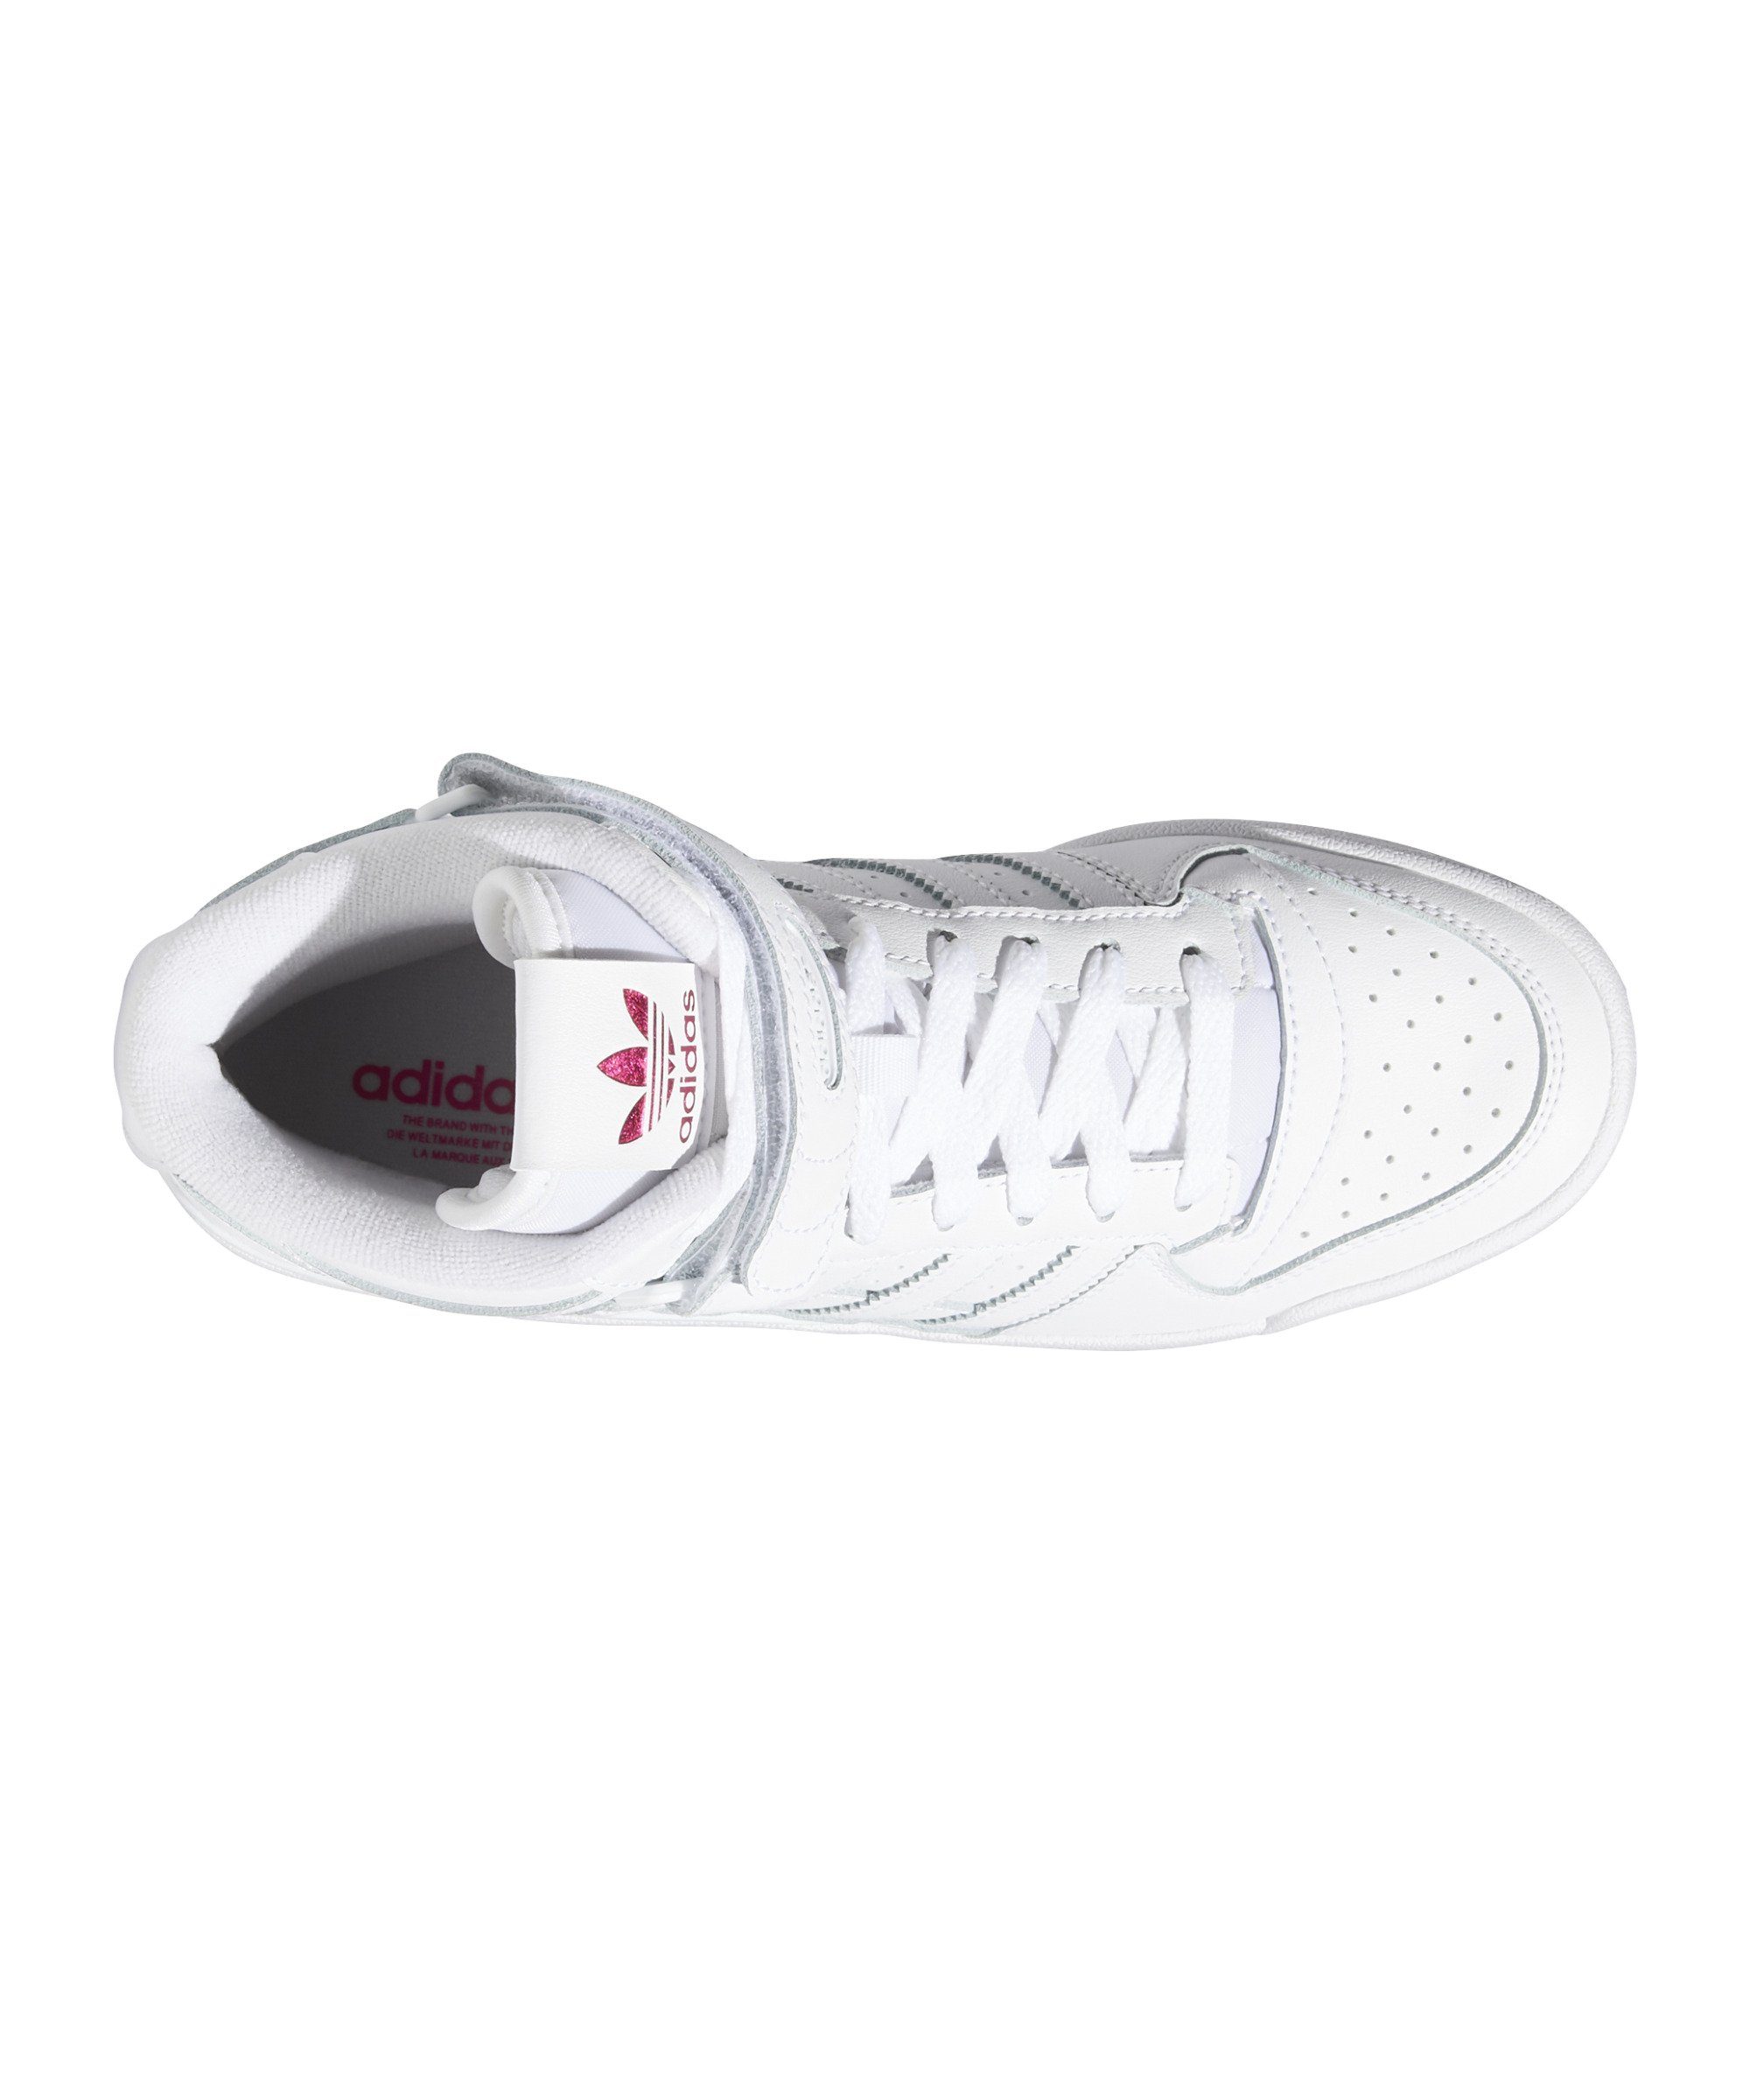 adidas Originals Forum Mid Damen Sneaker weisspink